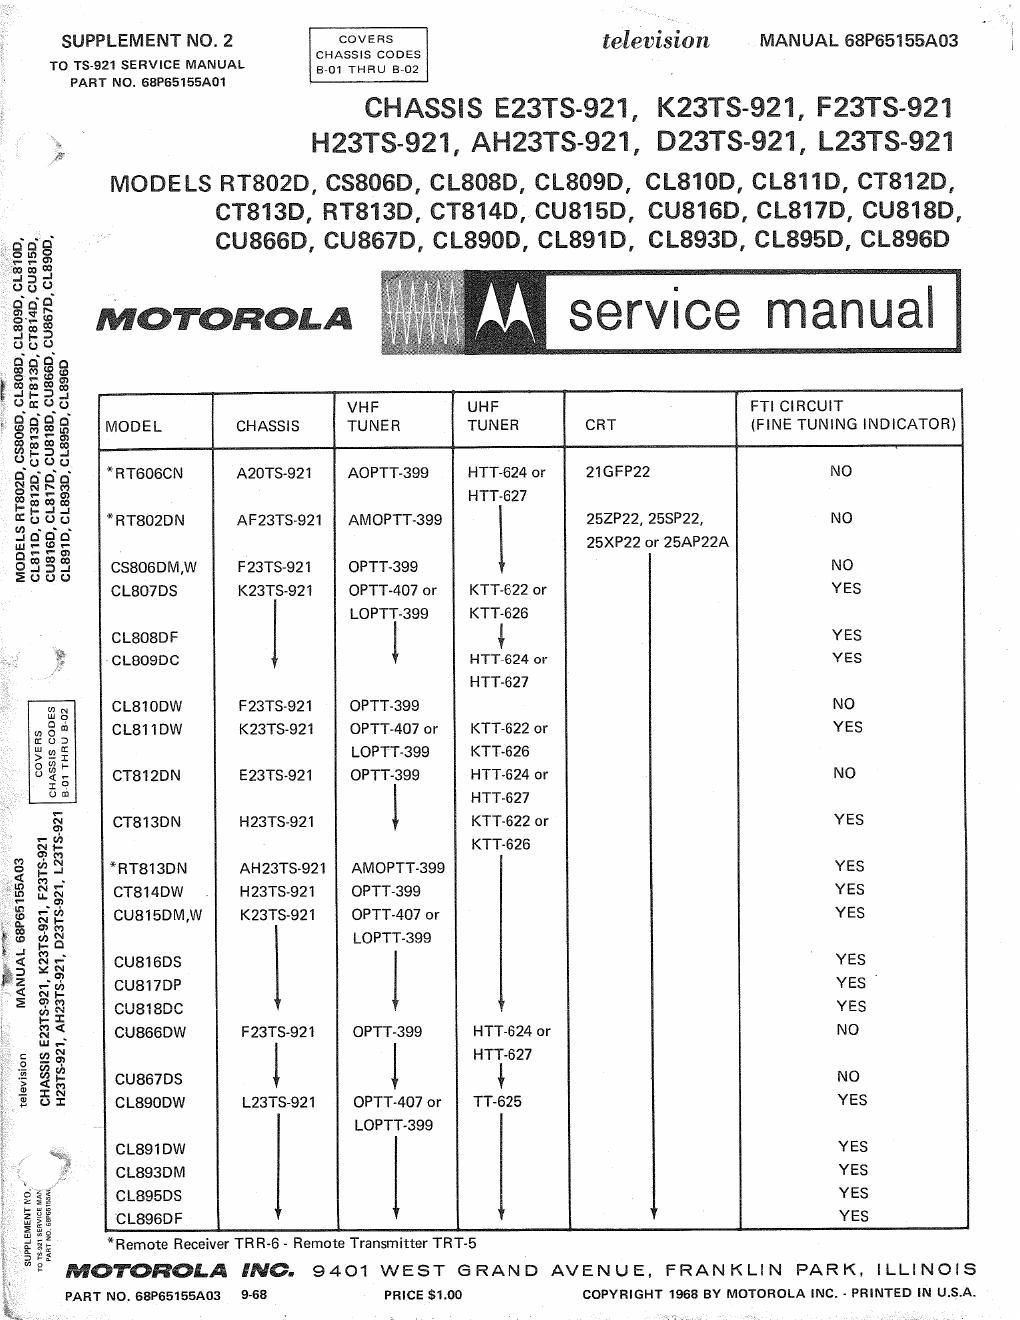 motorola cl 893 d service manual